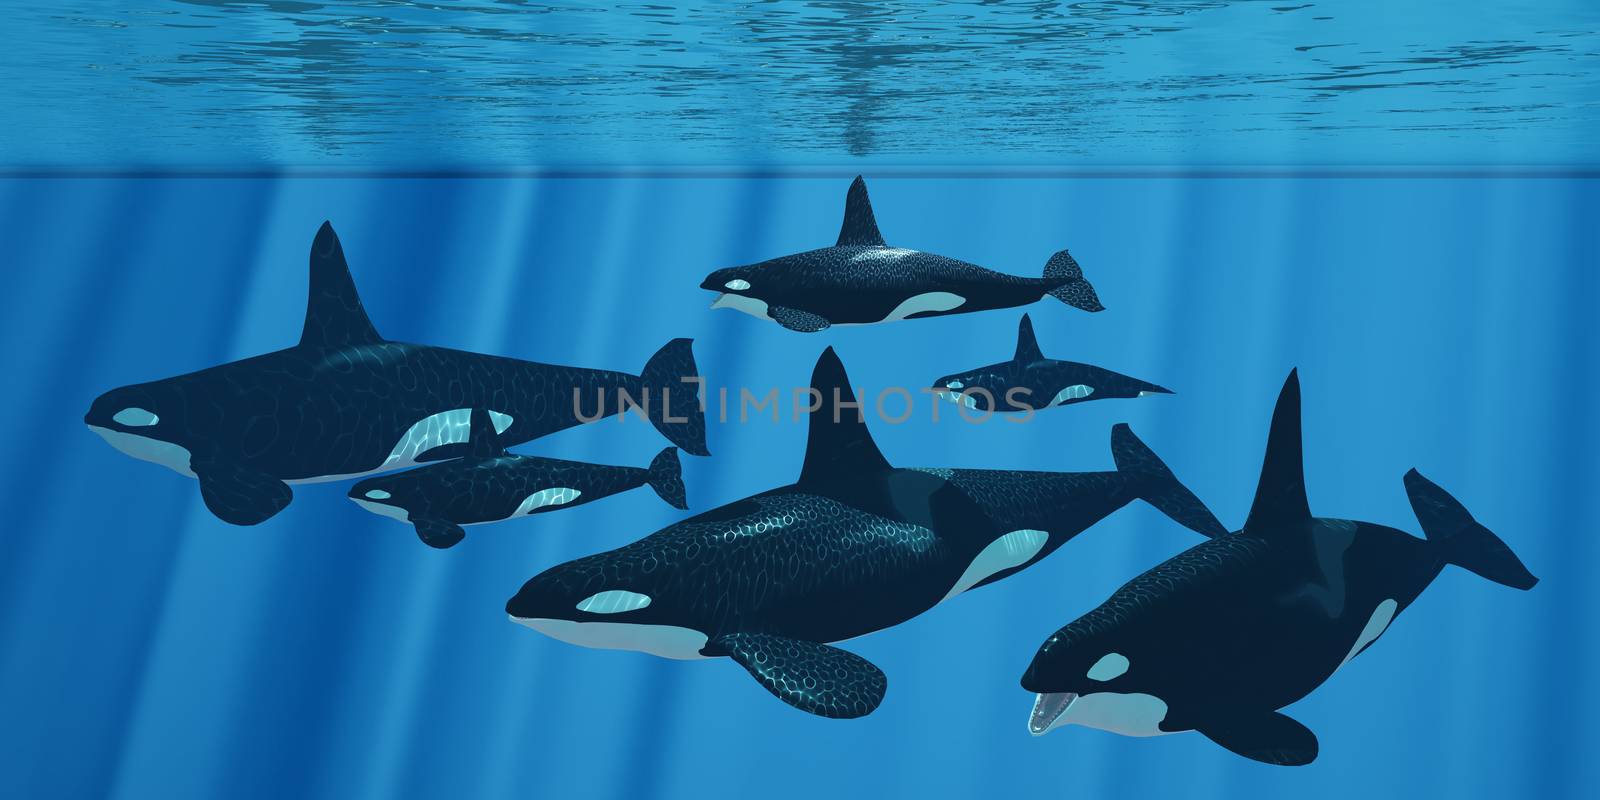 Killer Whale Family by Catmando